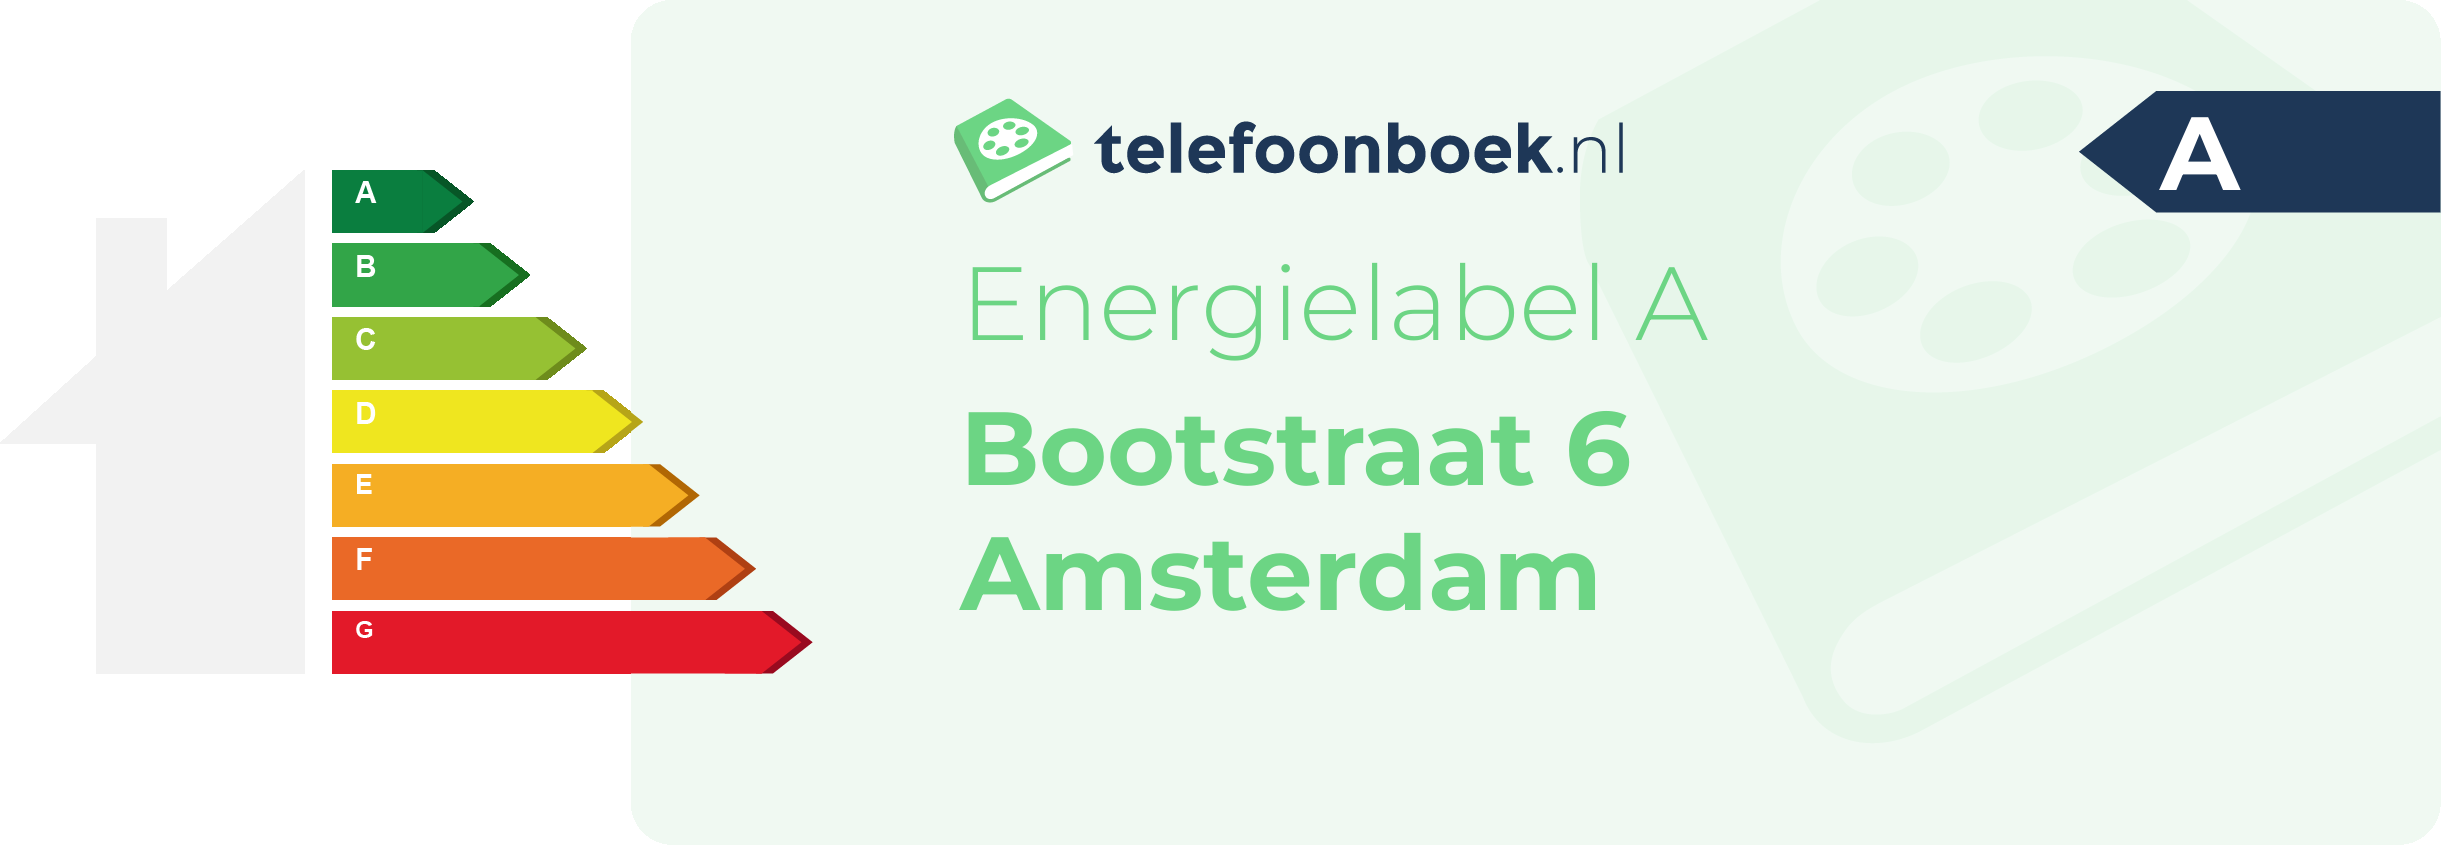 Energielabel Bootstraat 6 Amsterdam